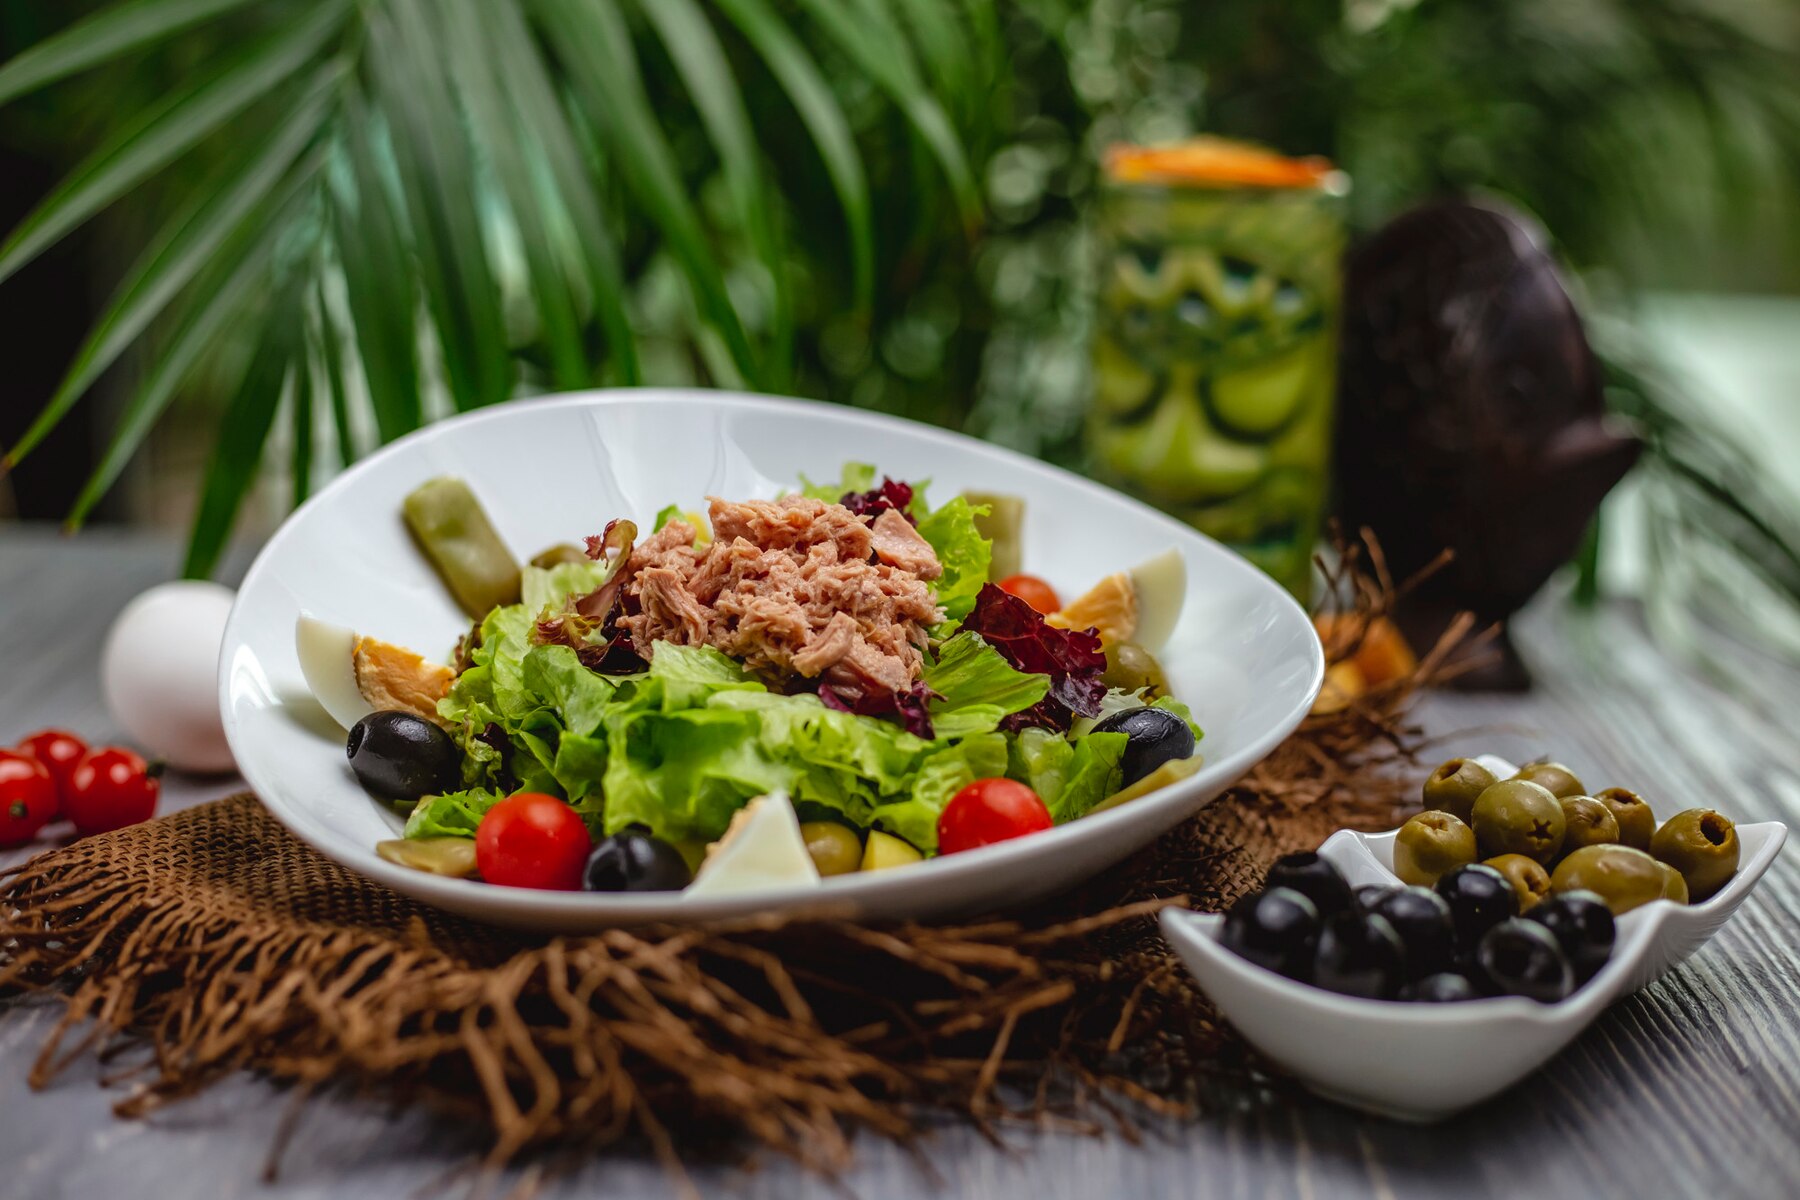 Preventing soggy tuna salad Tuna salad moisture control Avoiding watery tuna salad Tuna salad texture tips